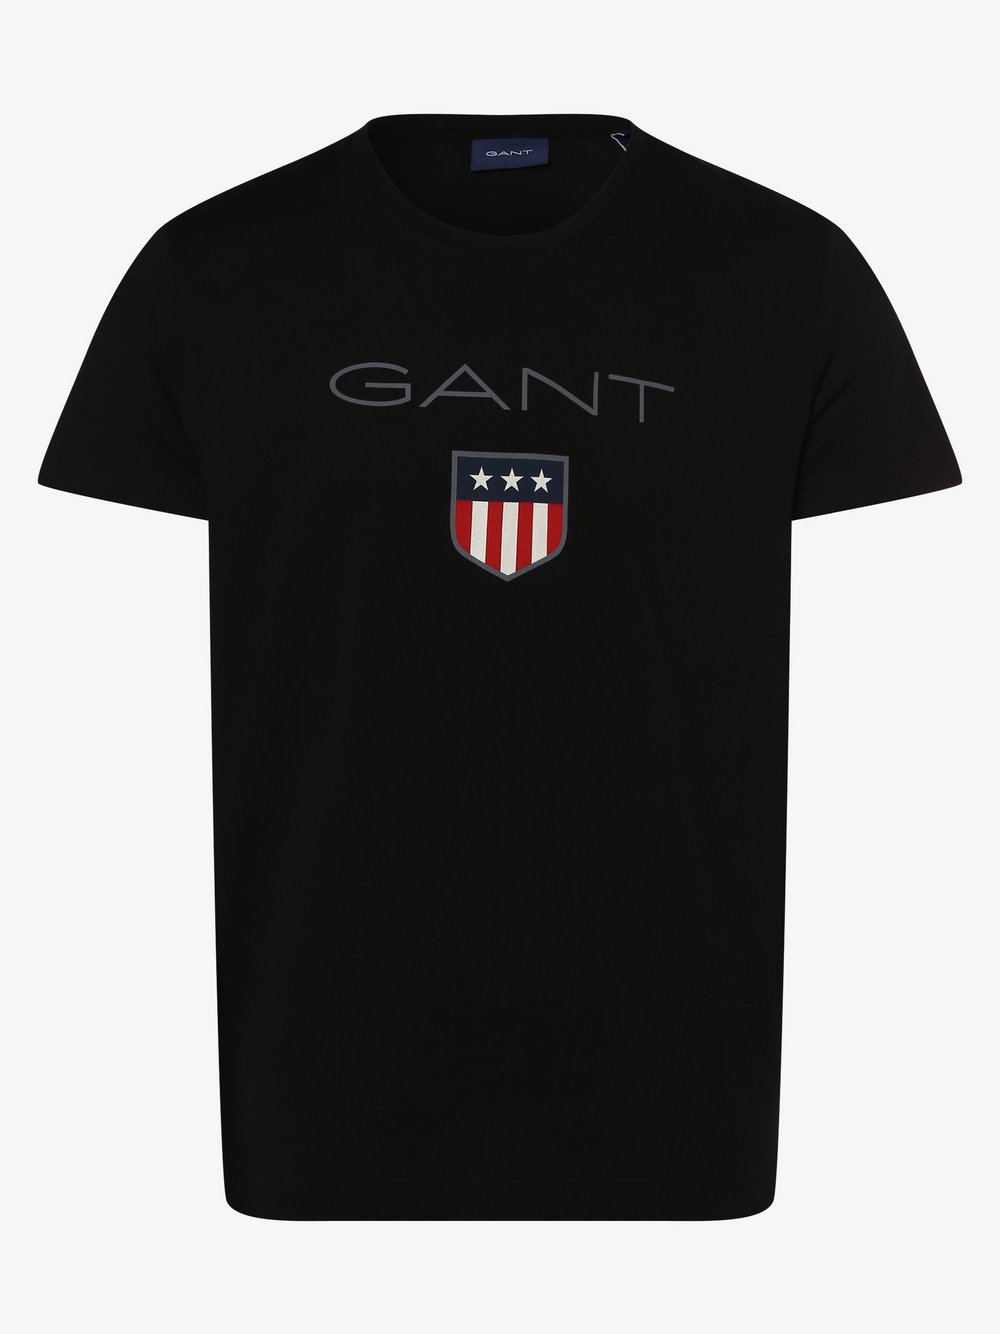 Gant - T-shirt męski, czarny